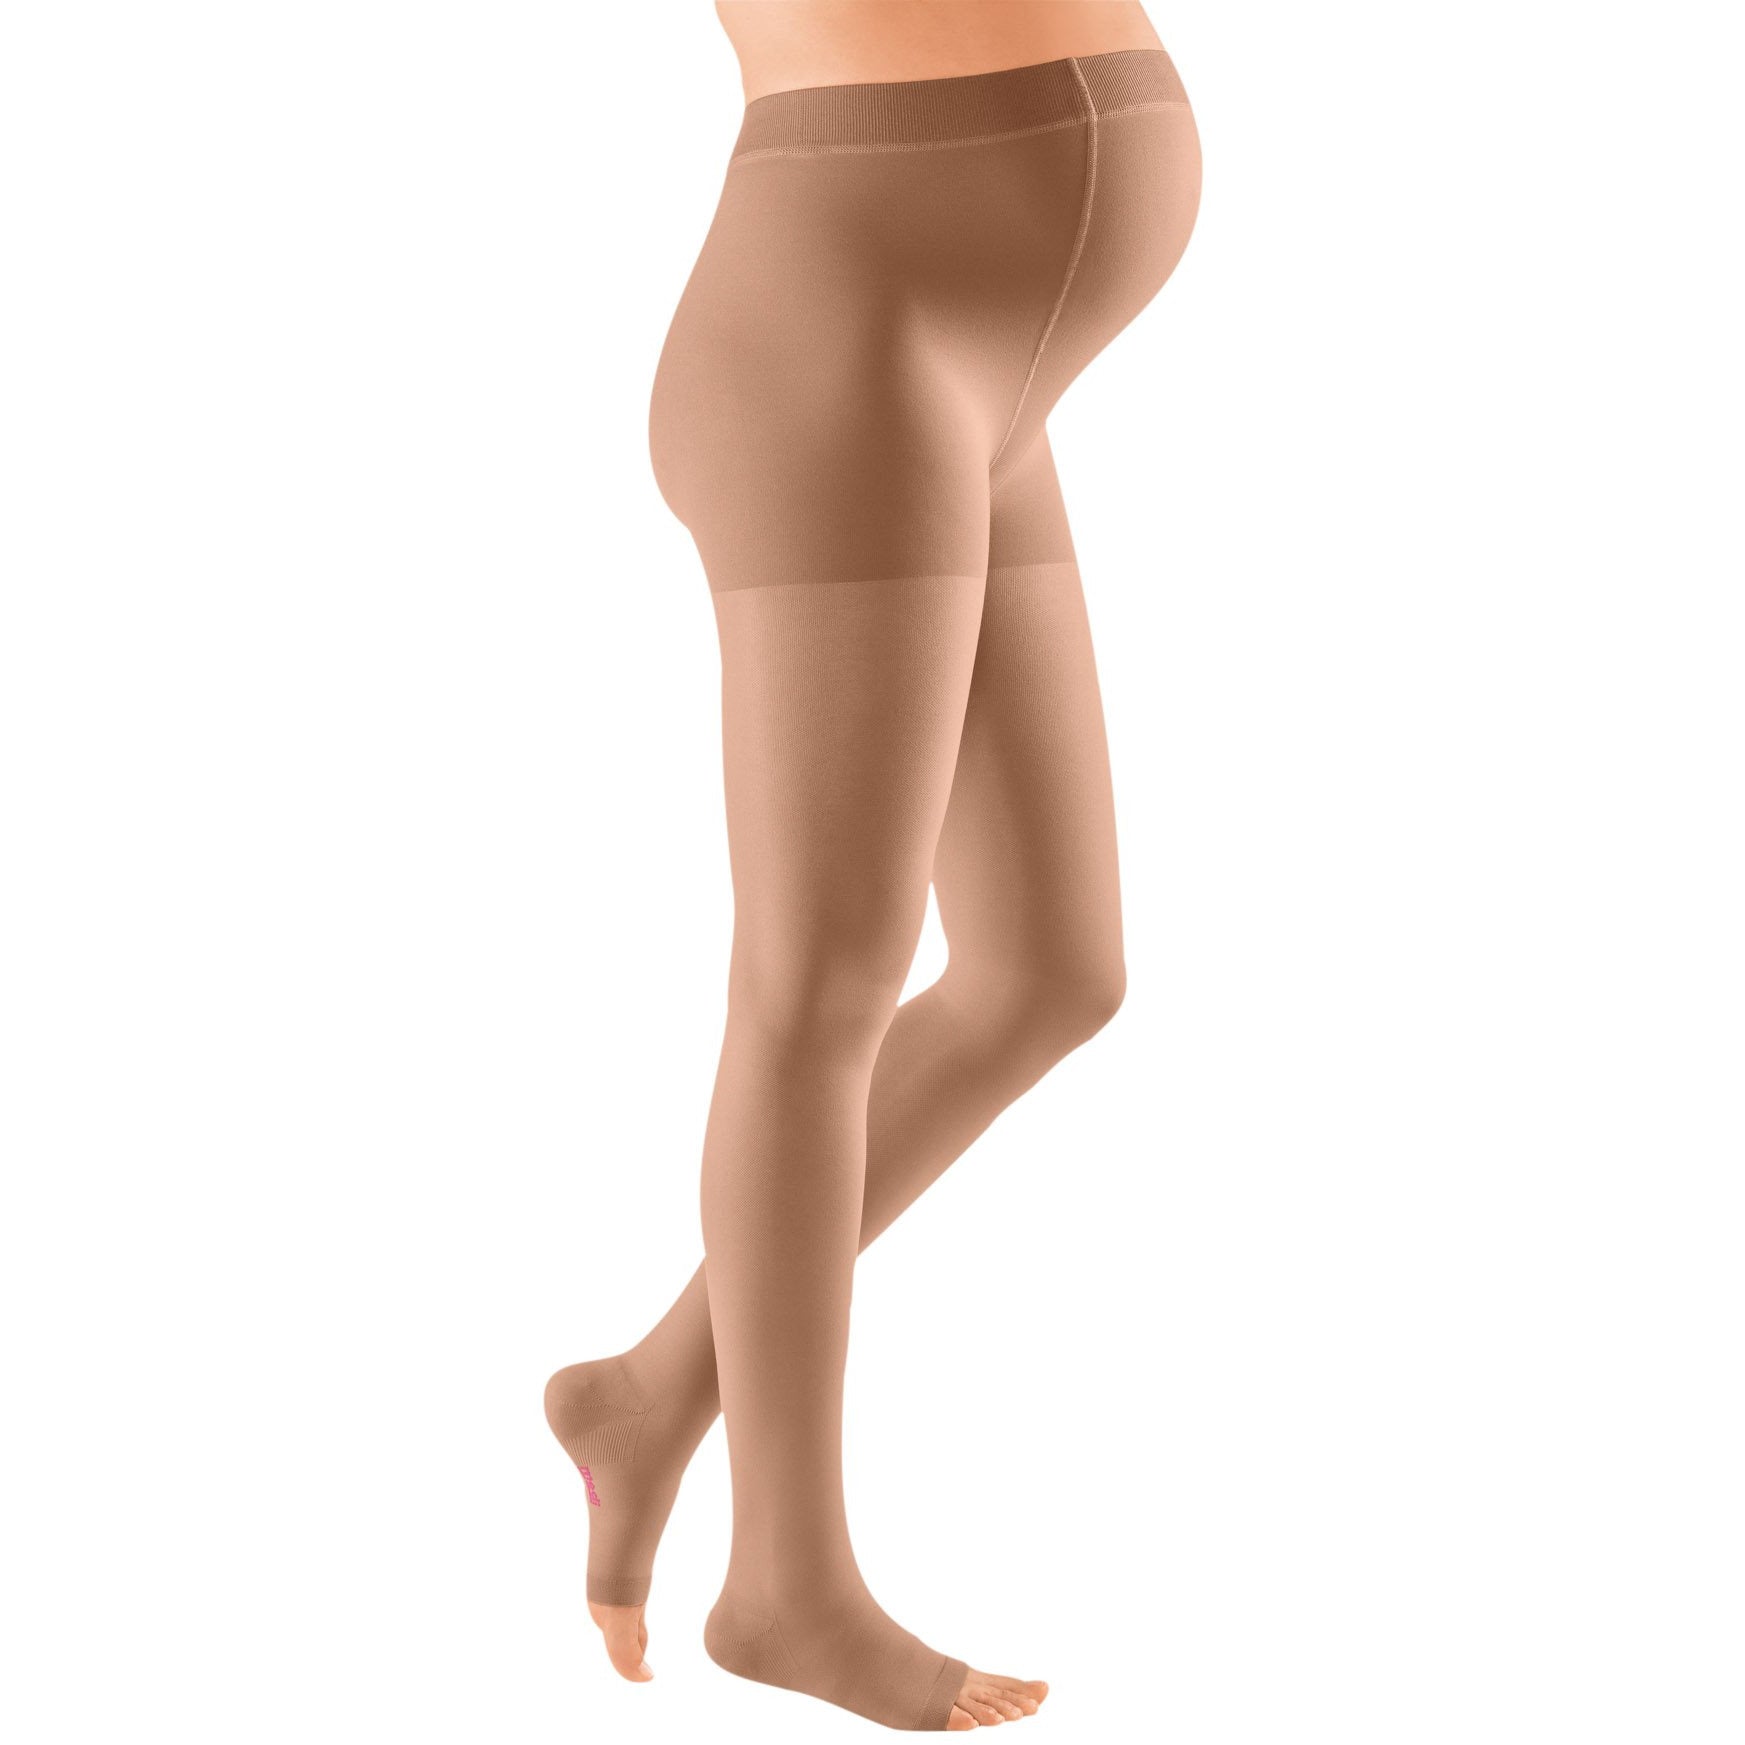 Maternity compression pantyhose mediven plus